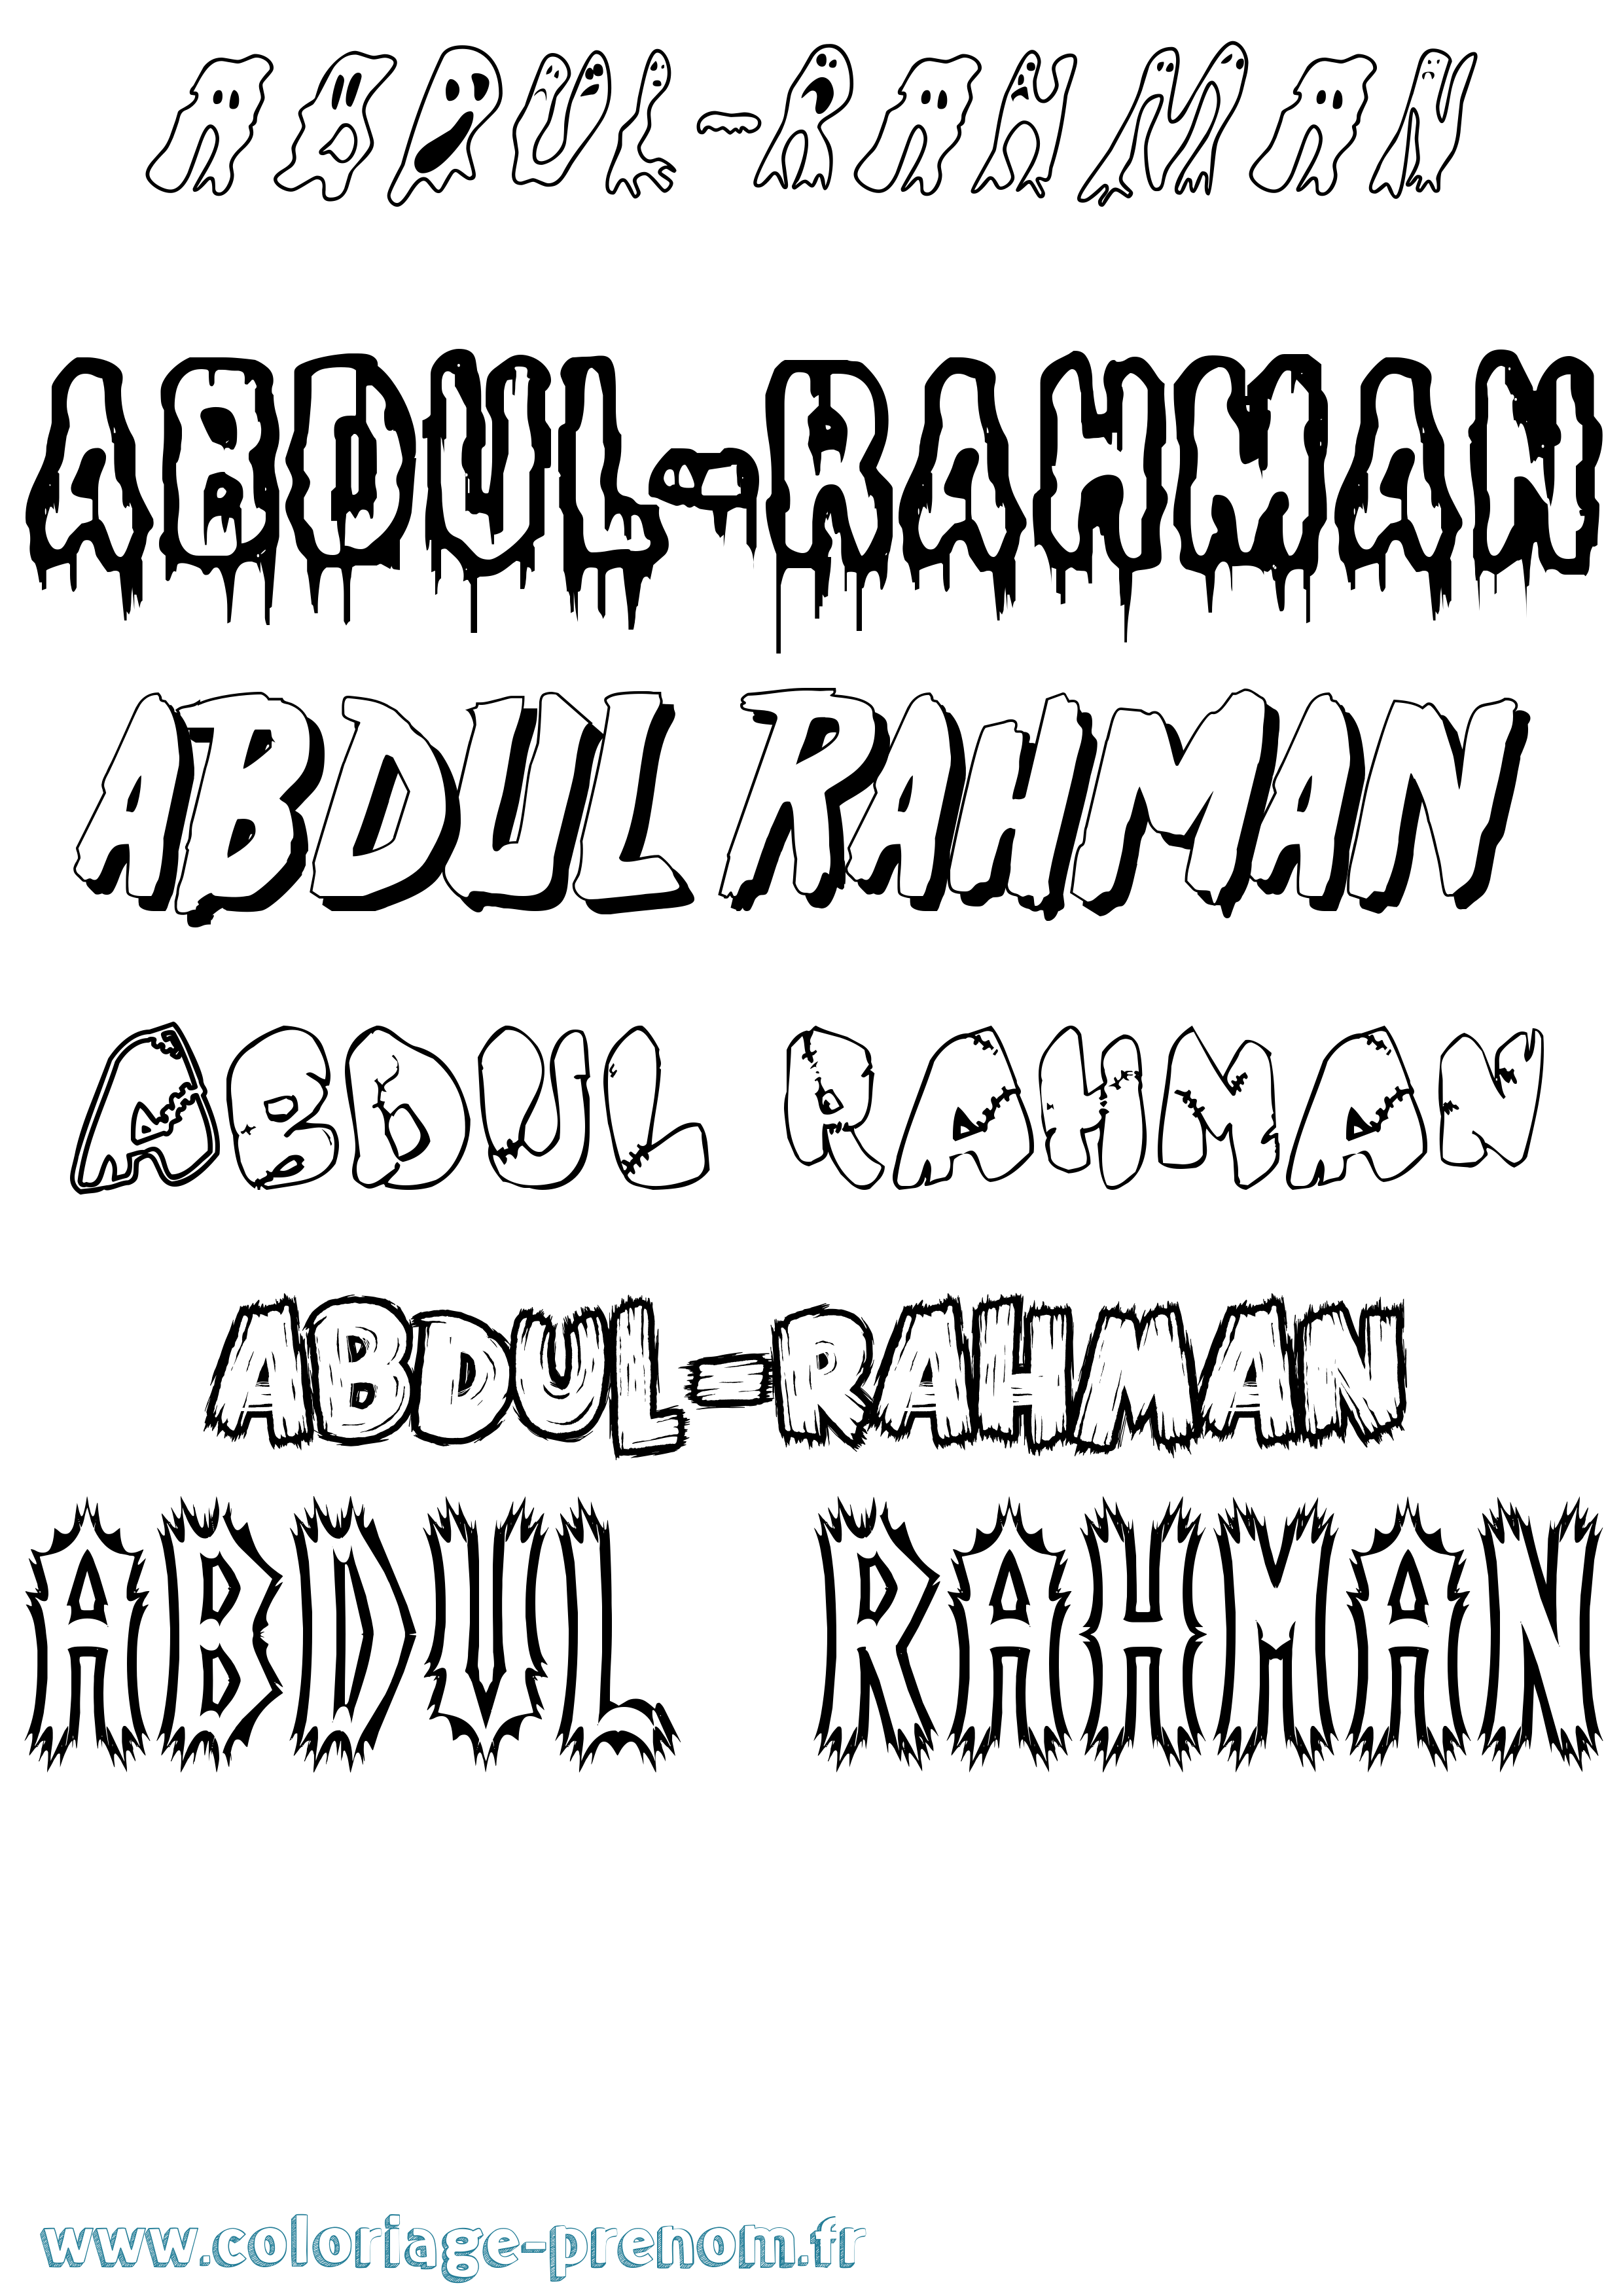 Coloriage prénom Abdul-Rahman Frisson